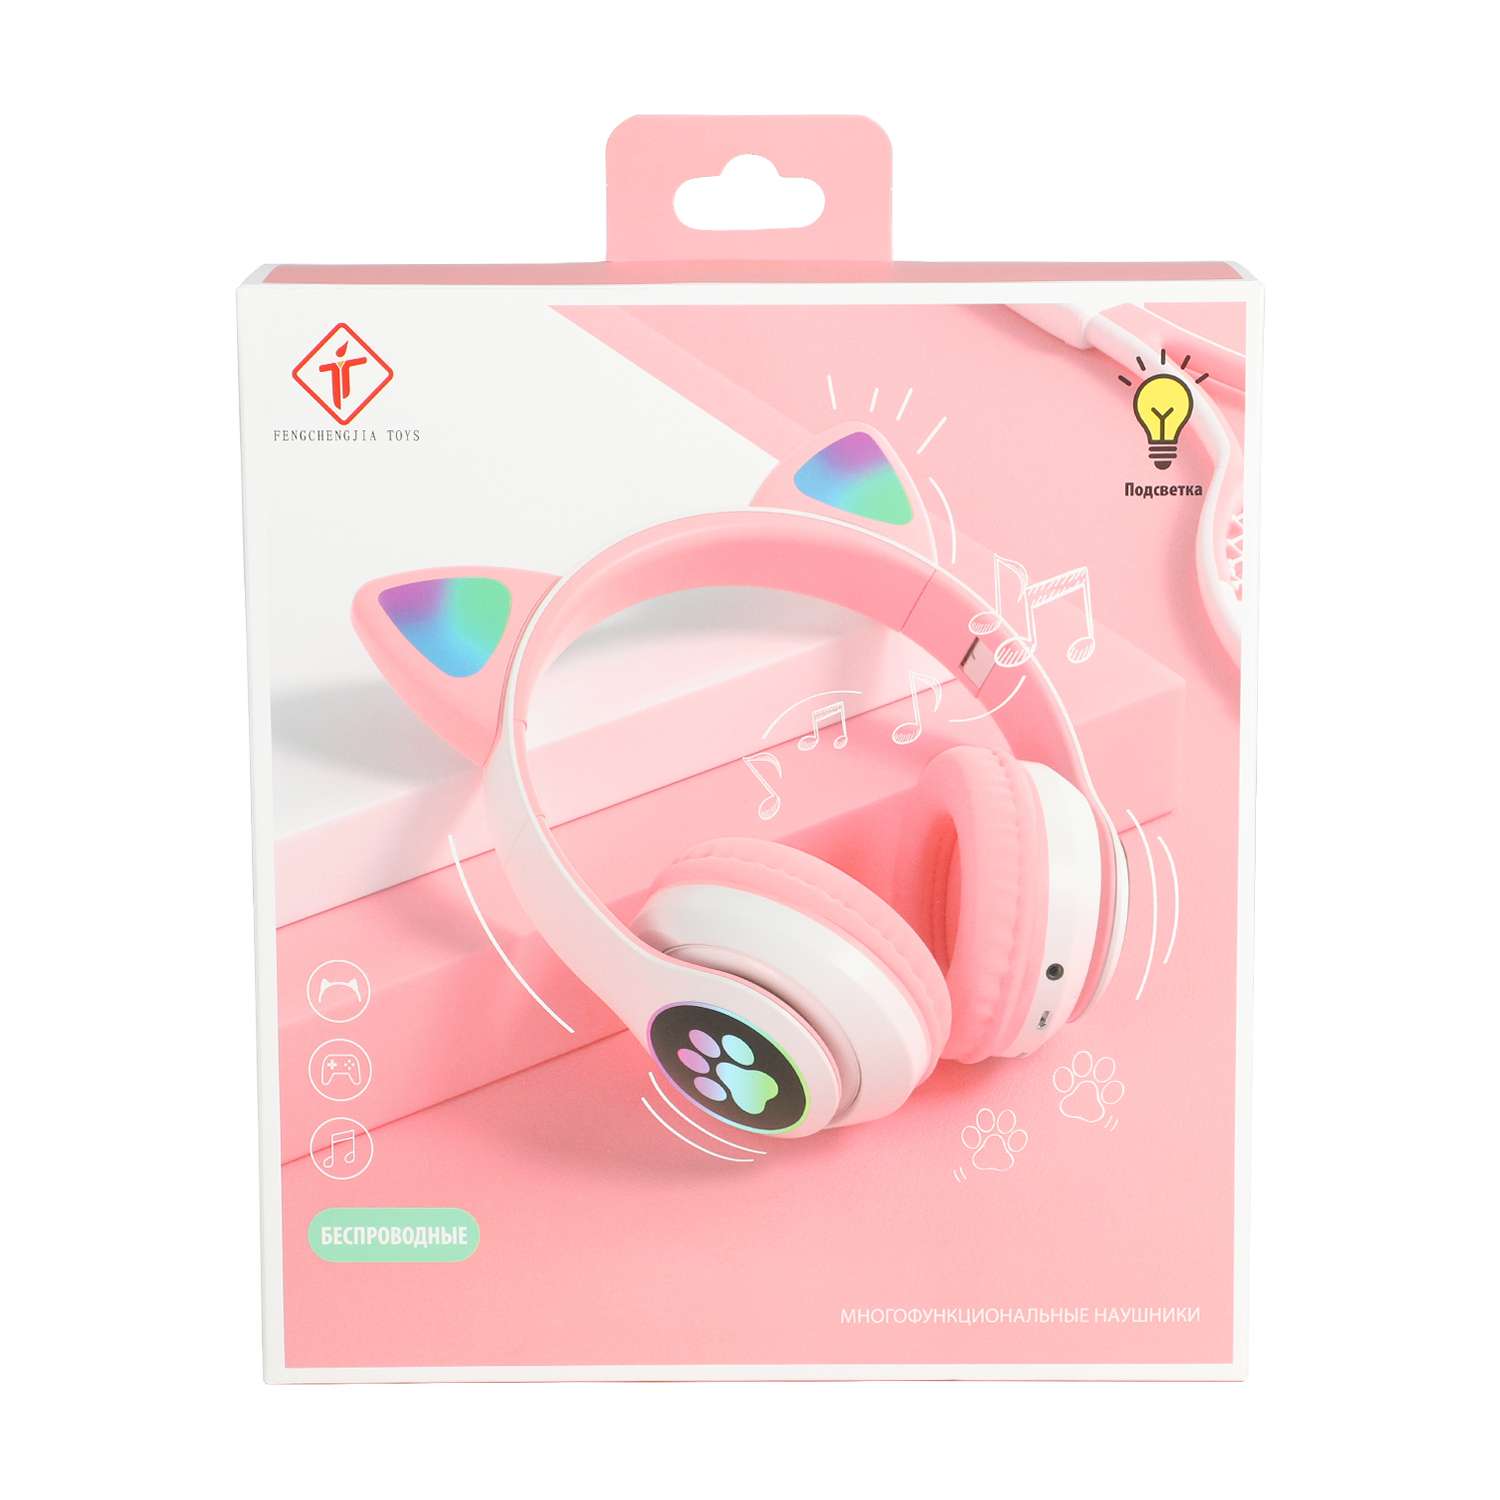 Наушники Fengchengjia toys Bluetooth Розовый YS0450971 - фото 2